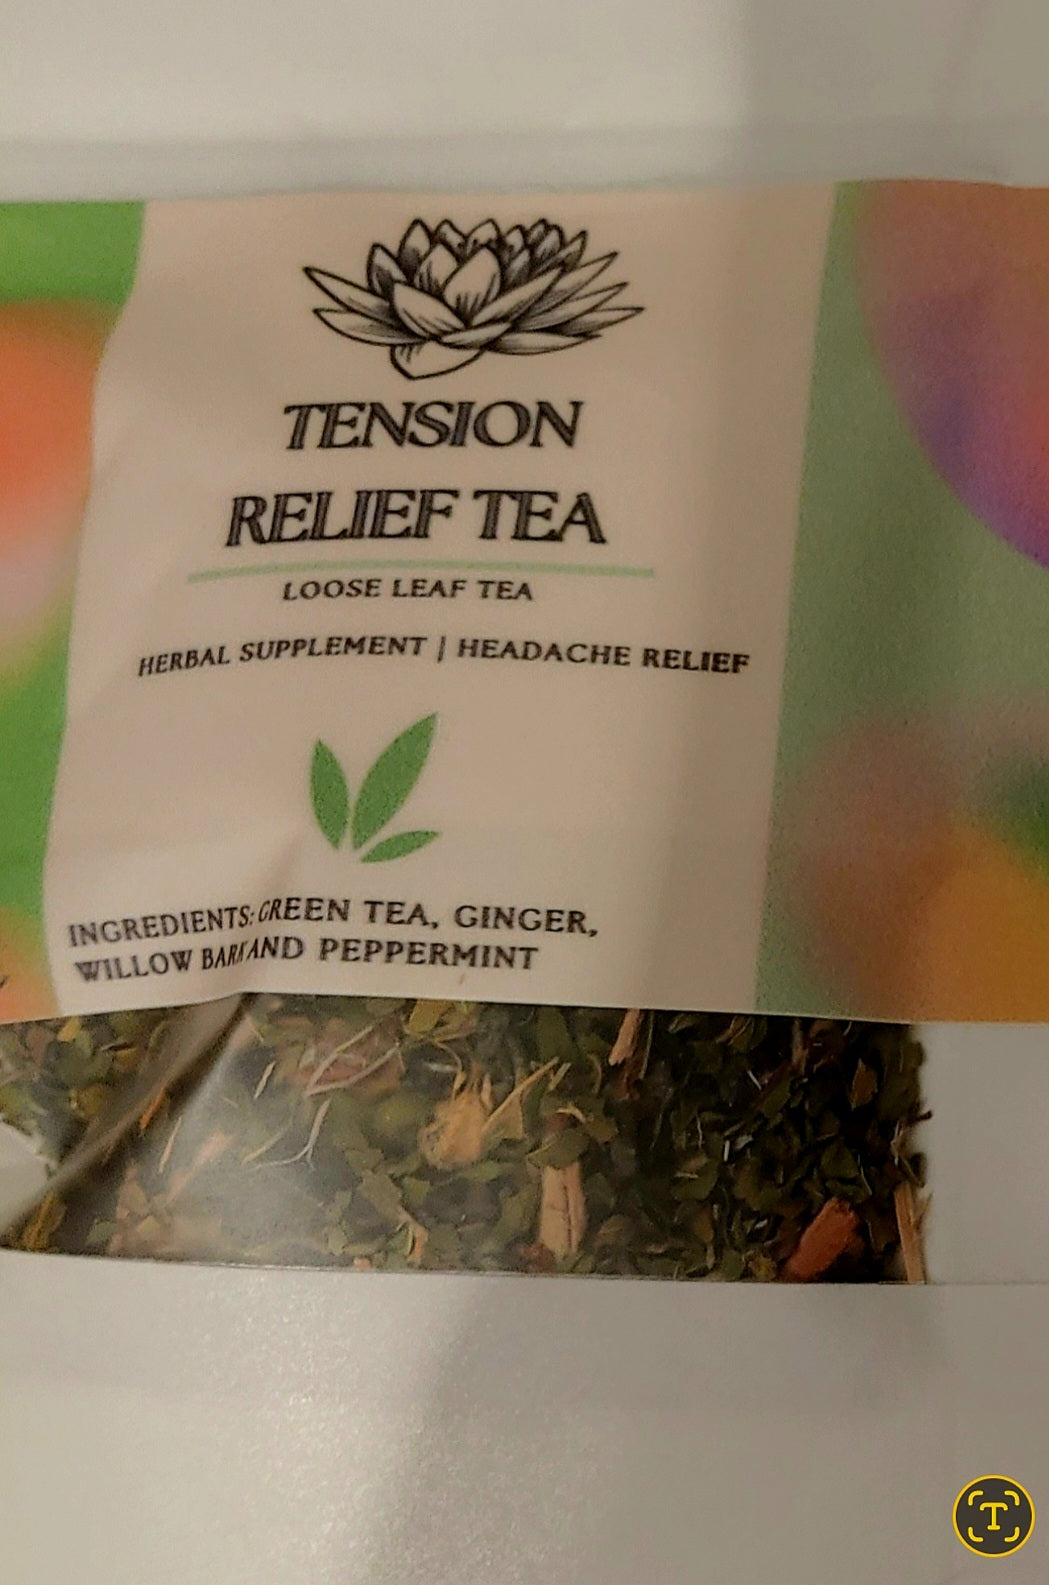 Tension Relief Tea (Headache Relief)